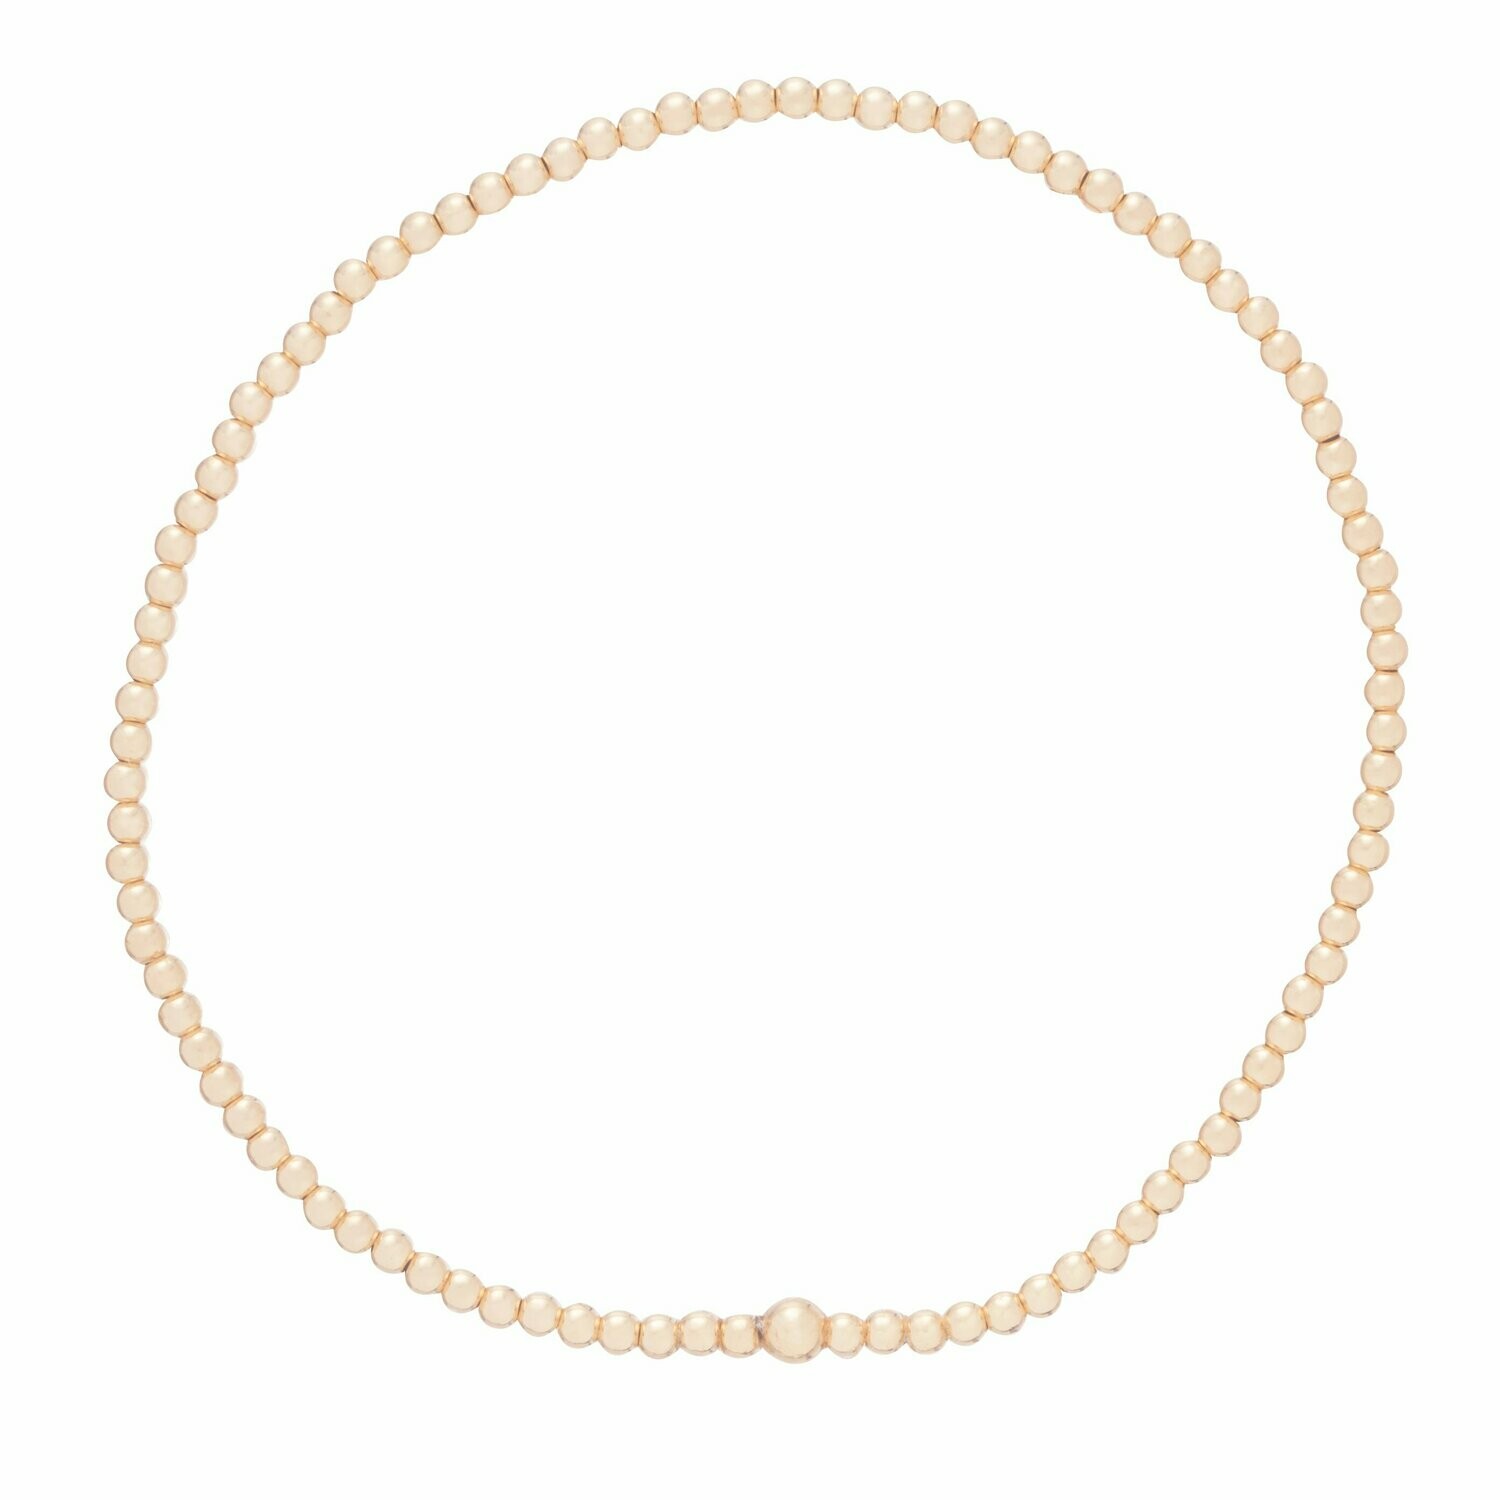 eNew classic gold bead bracelets - 2mm